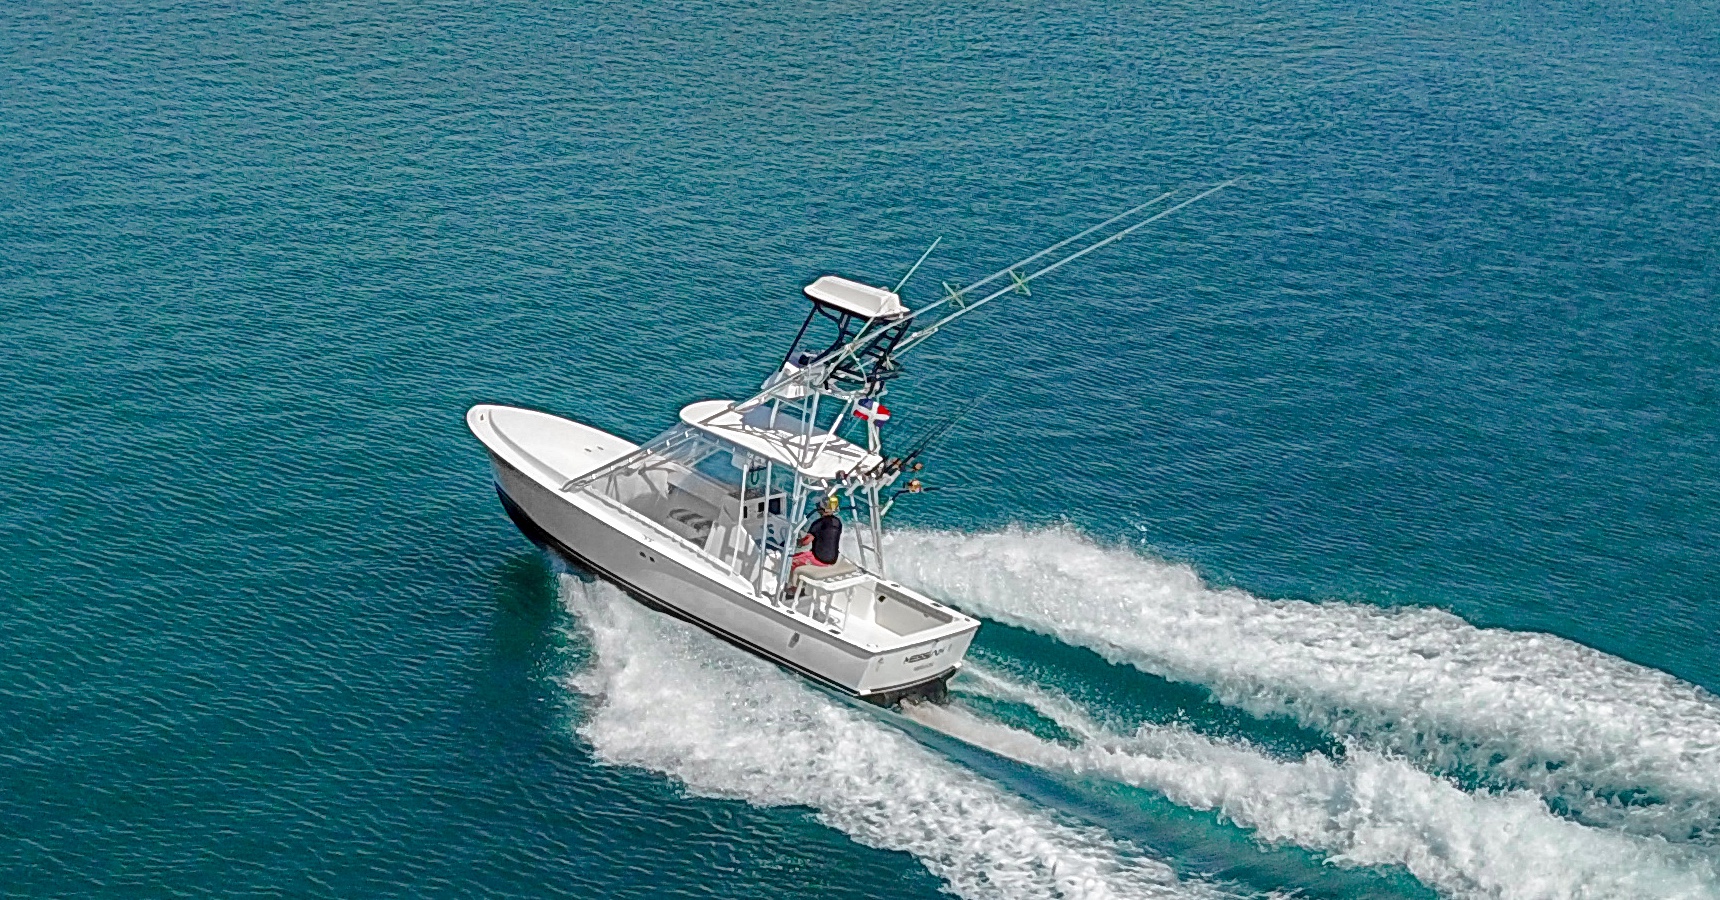 botes - sport fishing boat, strike 26' 
motor cumins 6bta 370 hp
diesel 
bote de pesca  9